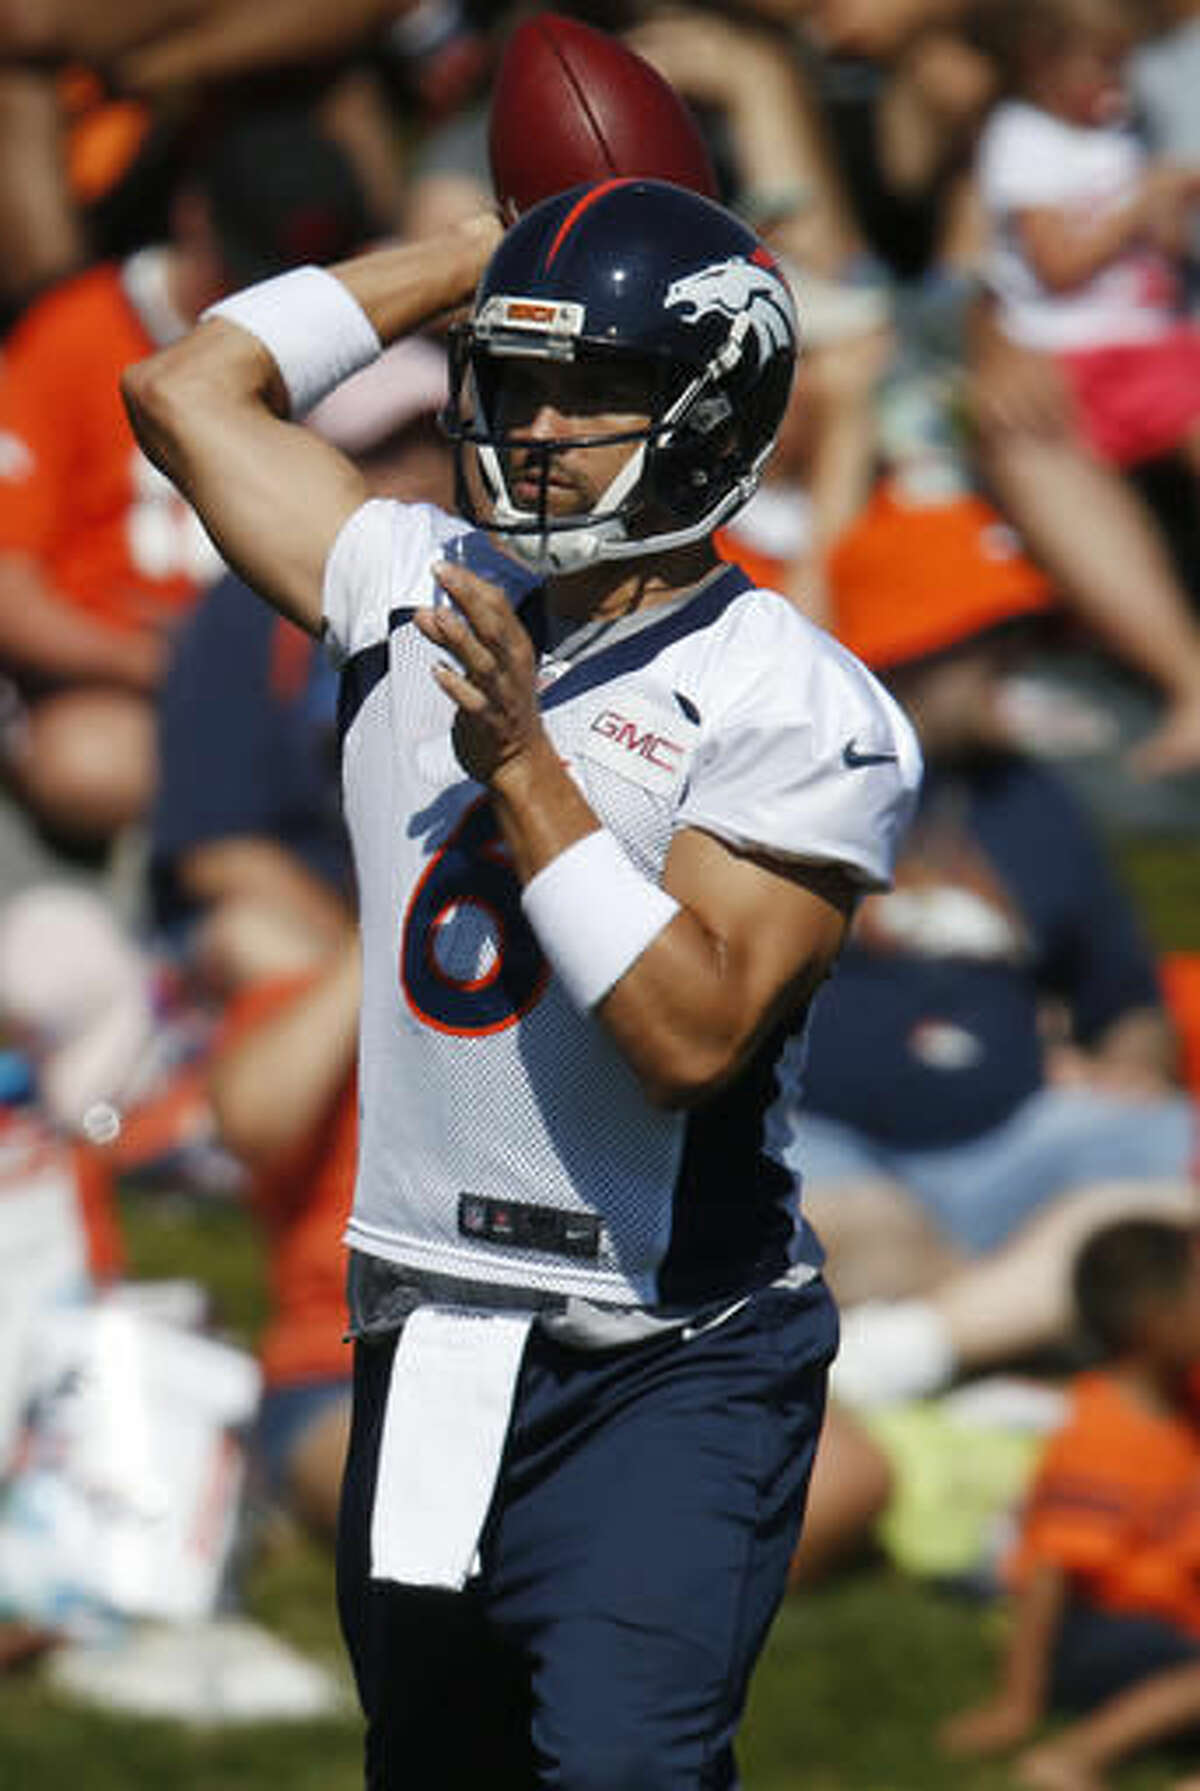 Denver Broncos quarterback Mark Sanchez takes part in drills during the team's NFL football practice Monday, Aug. 8, 2016 in Englewood, Colo. (AP Photo/David Zalubowski)